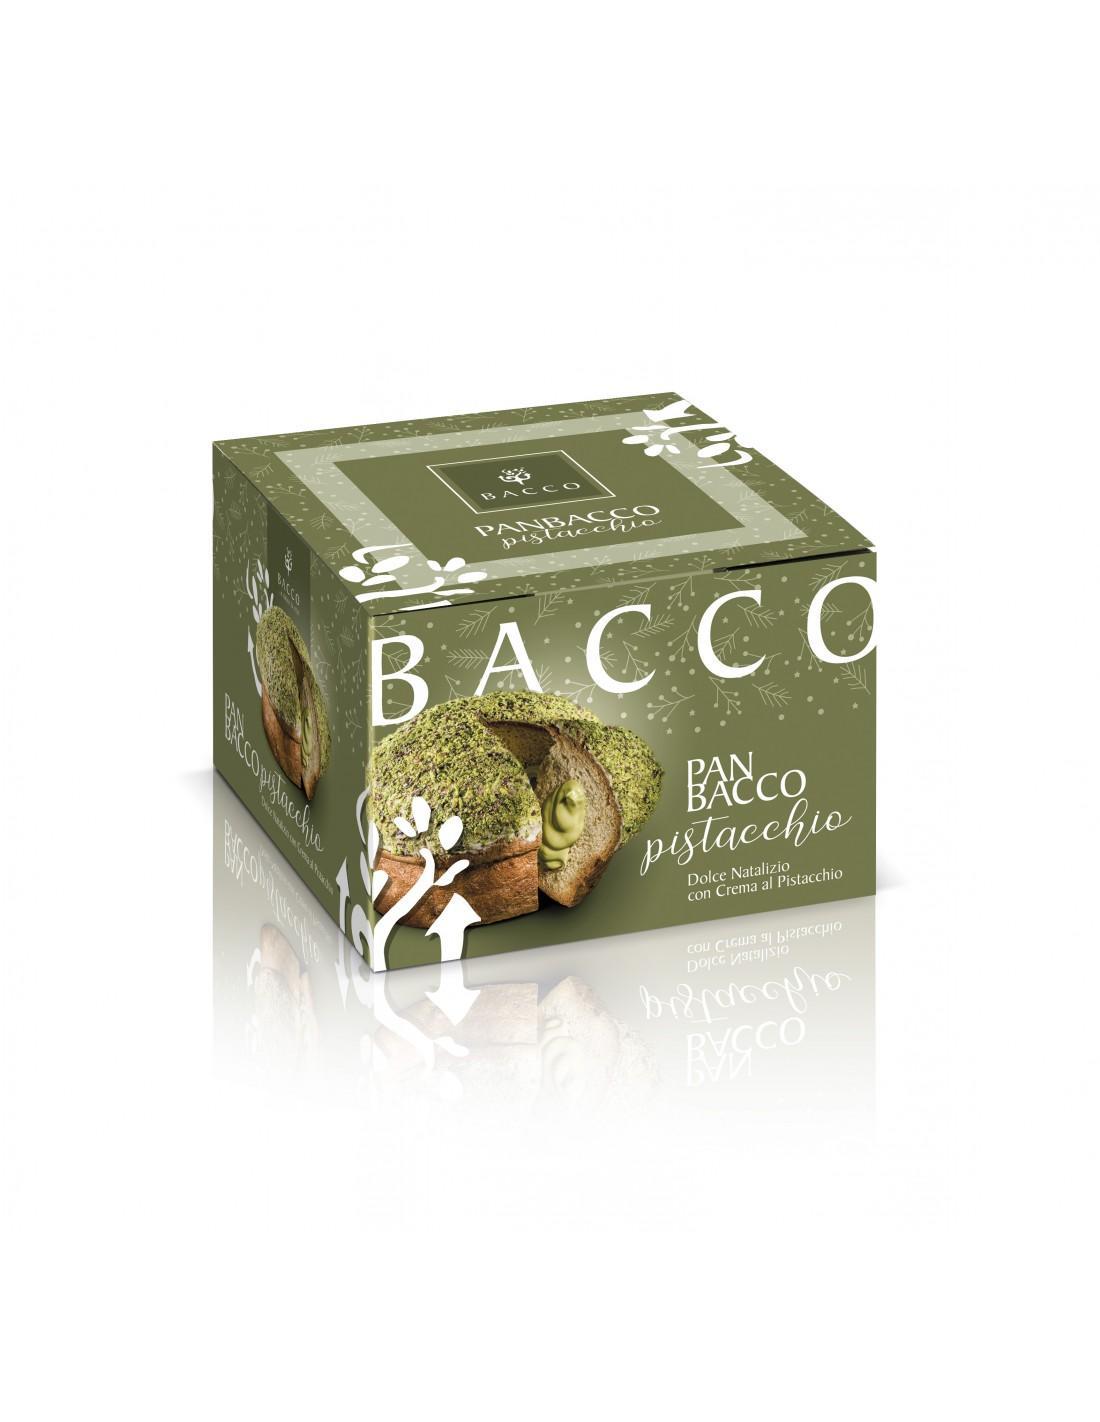 panettone-panbacco-pistacchio-bacco-900gr